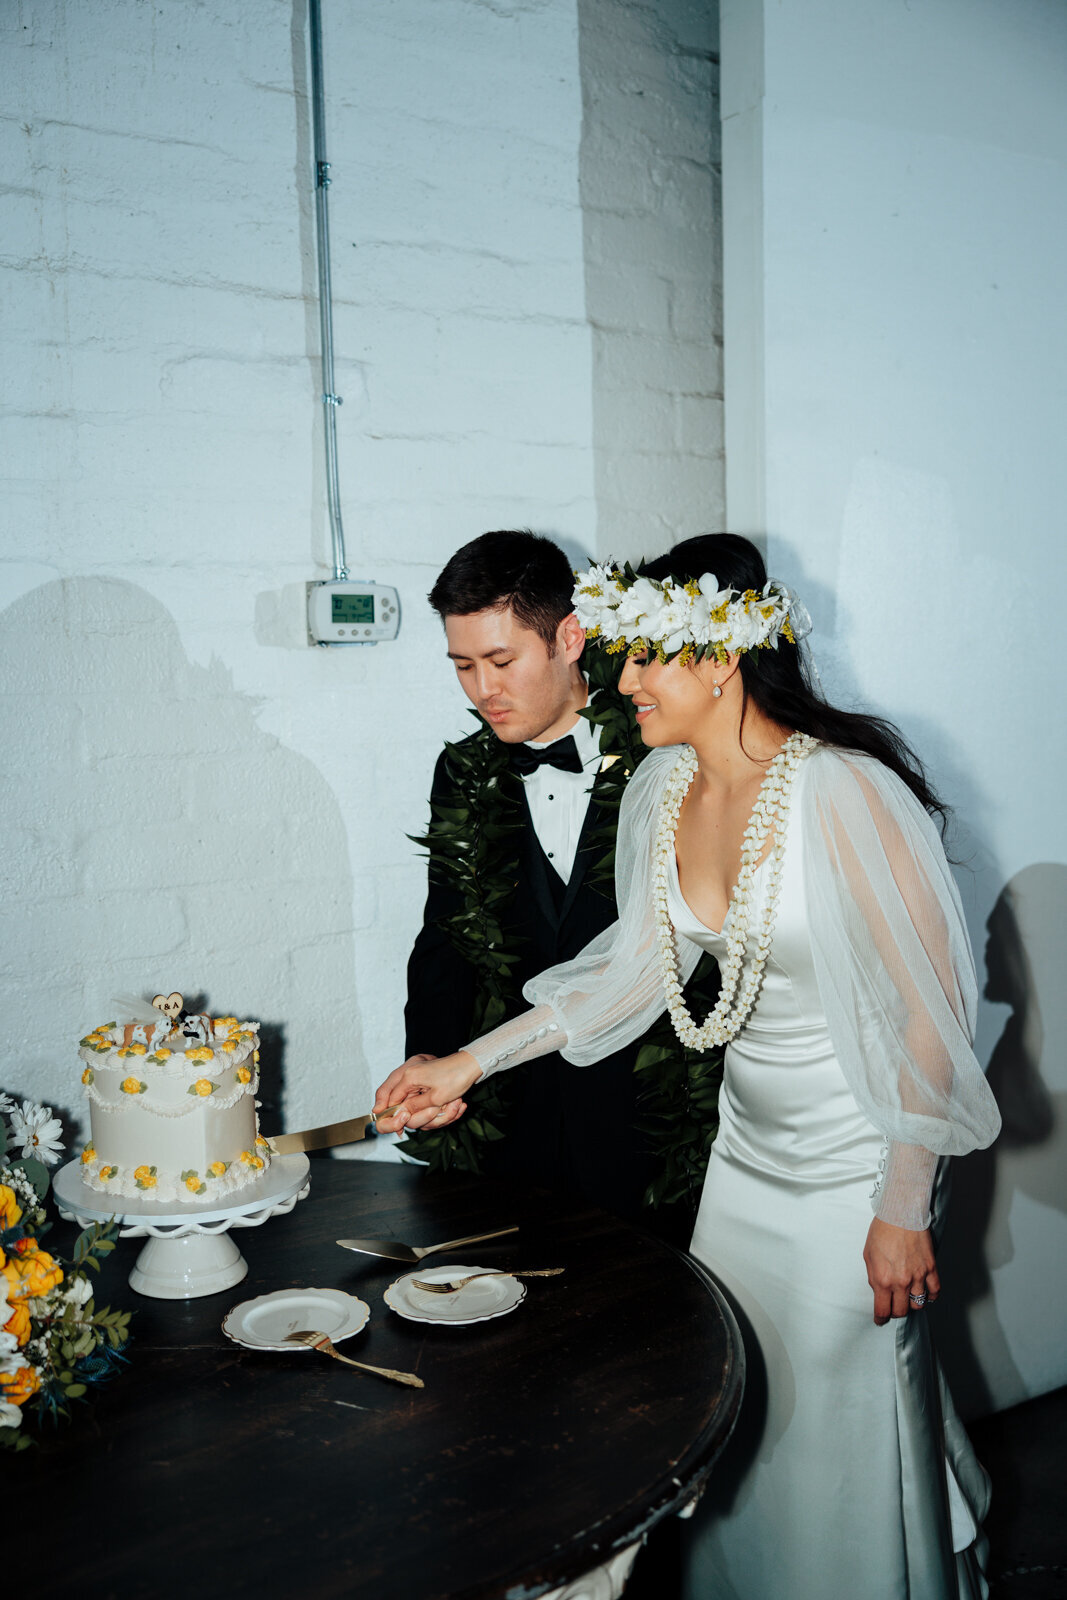 couple cutting the wedding cake in Las Vegas